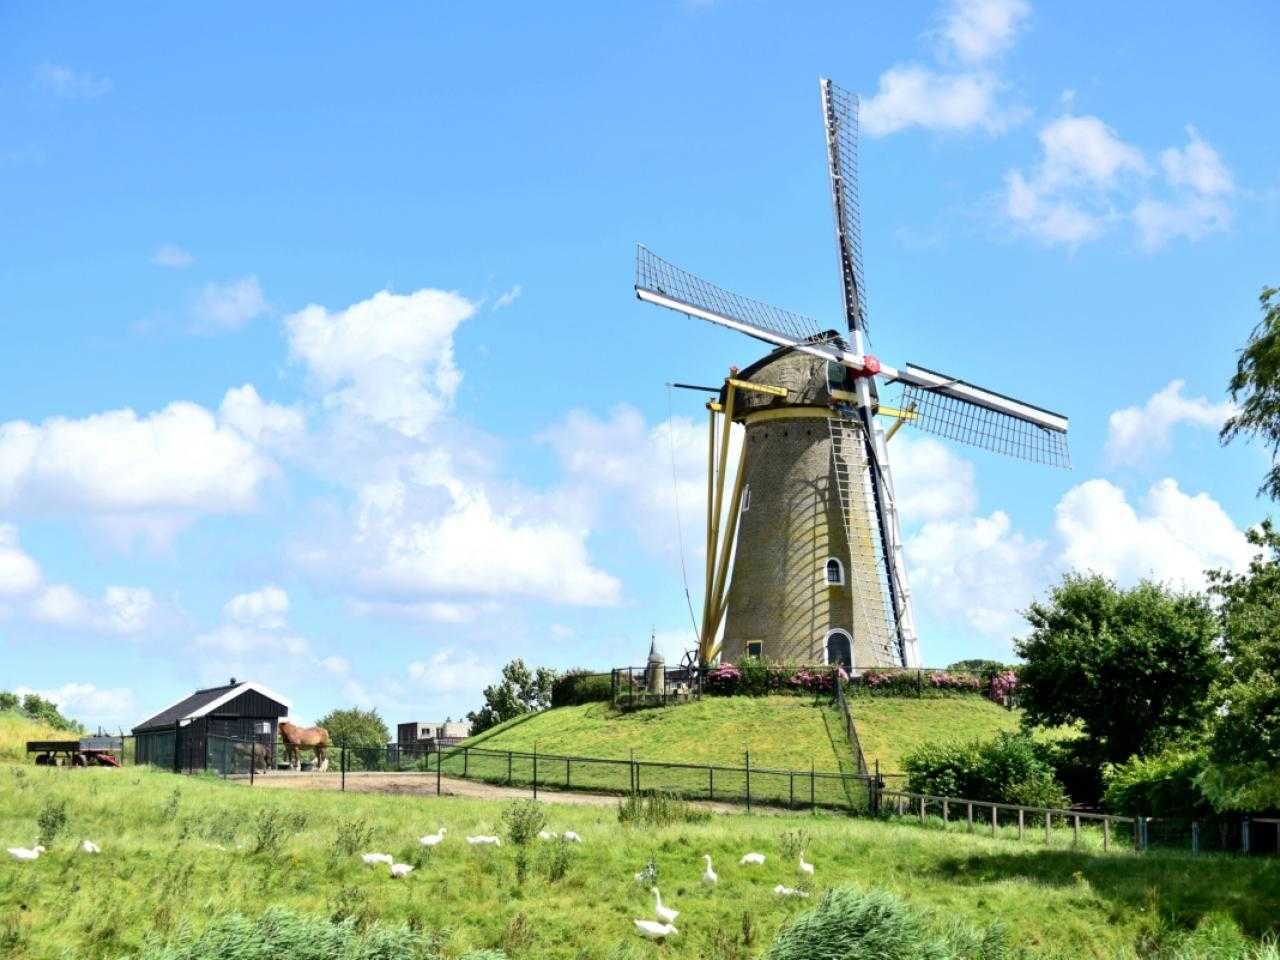 Windmill the Eersteling in Hoofddorp